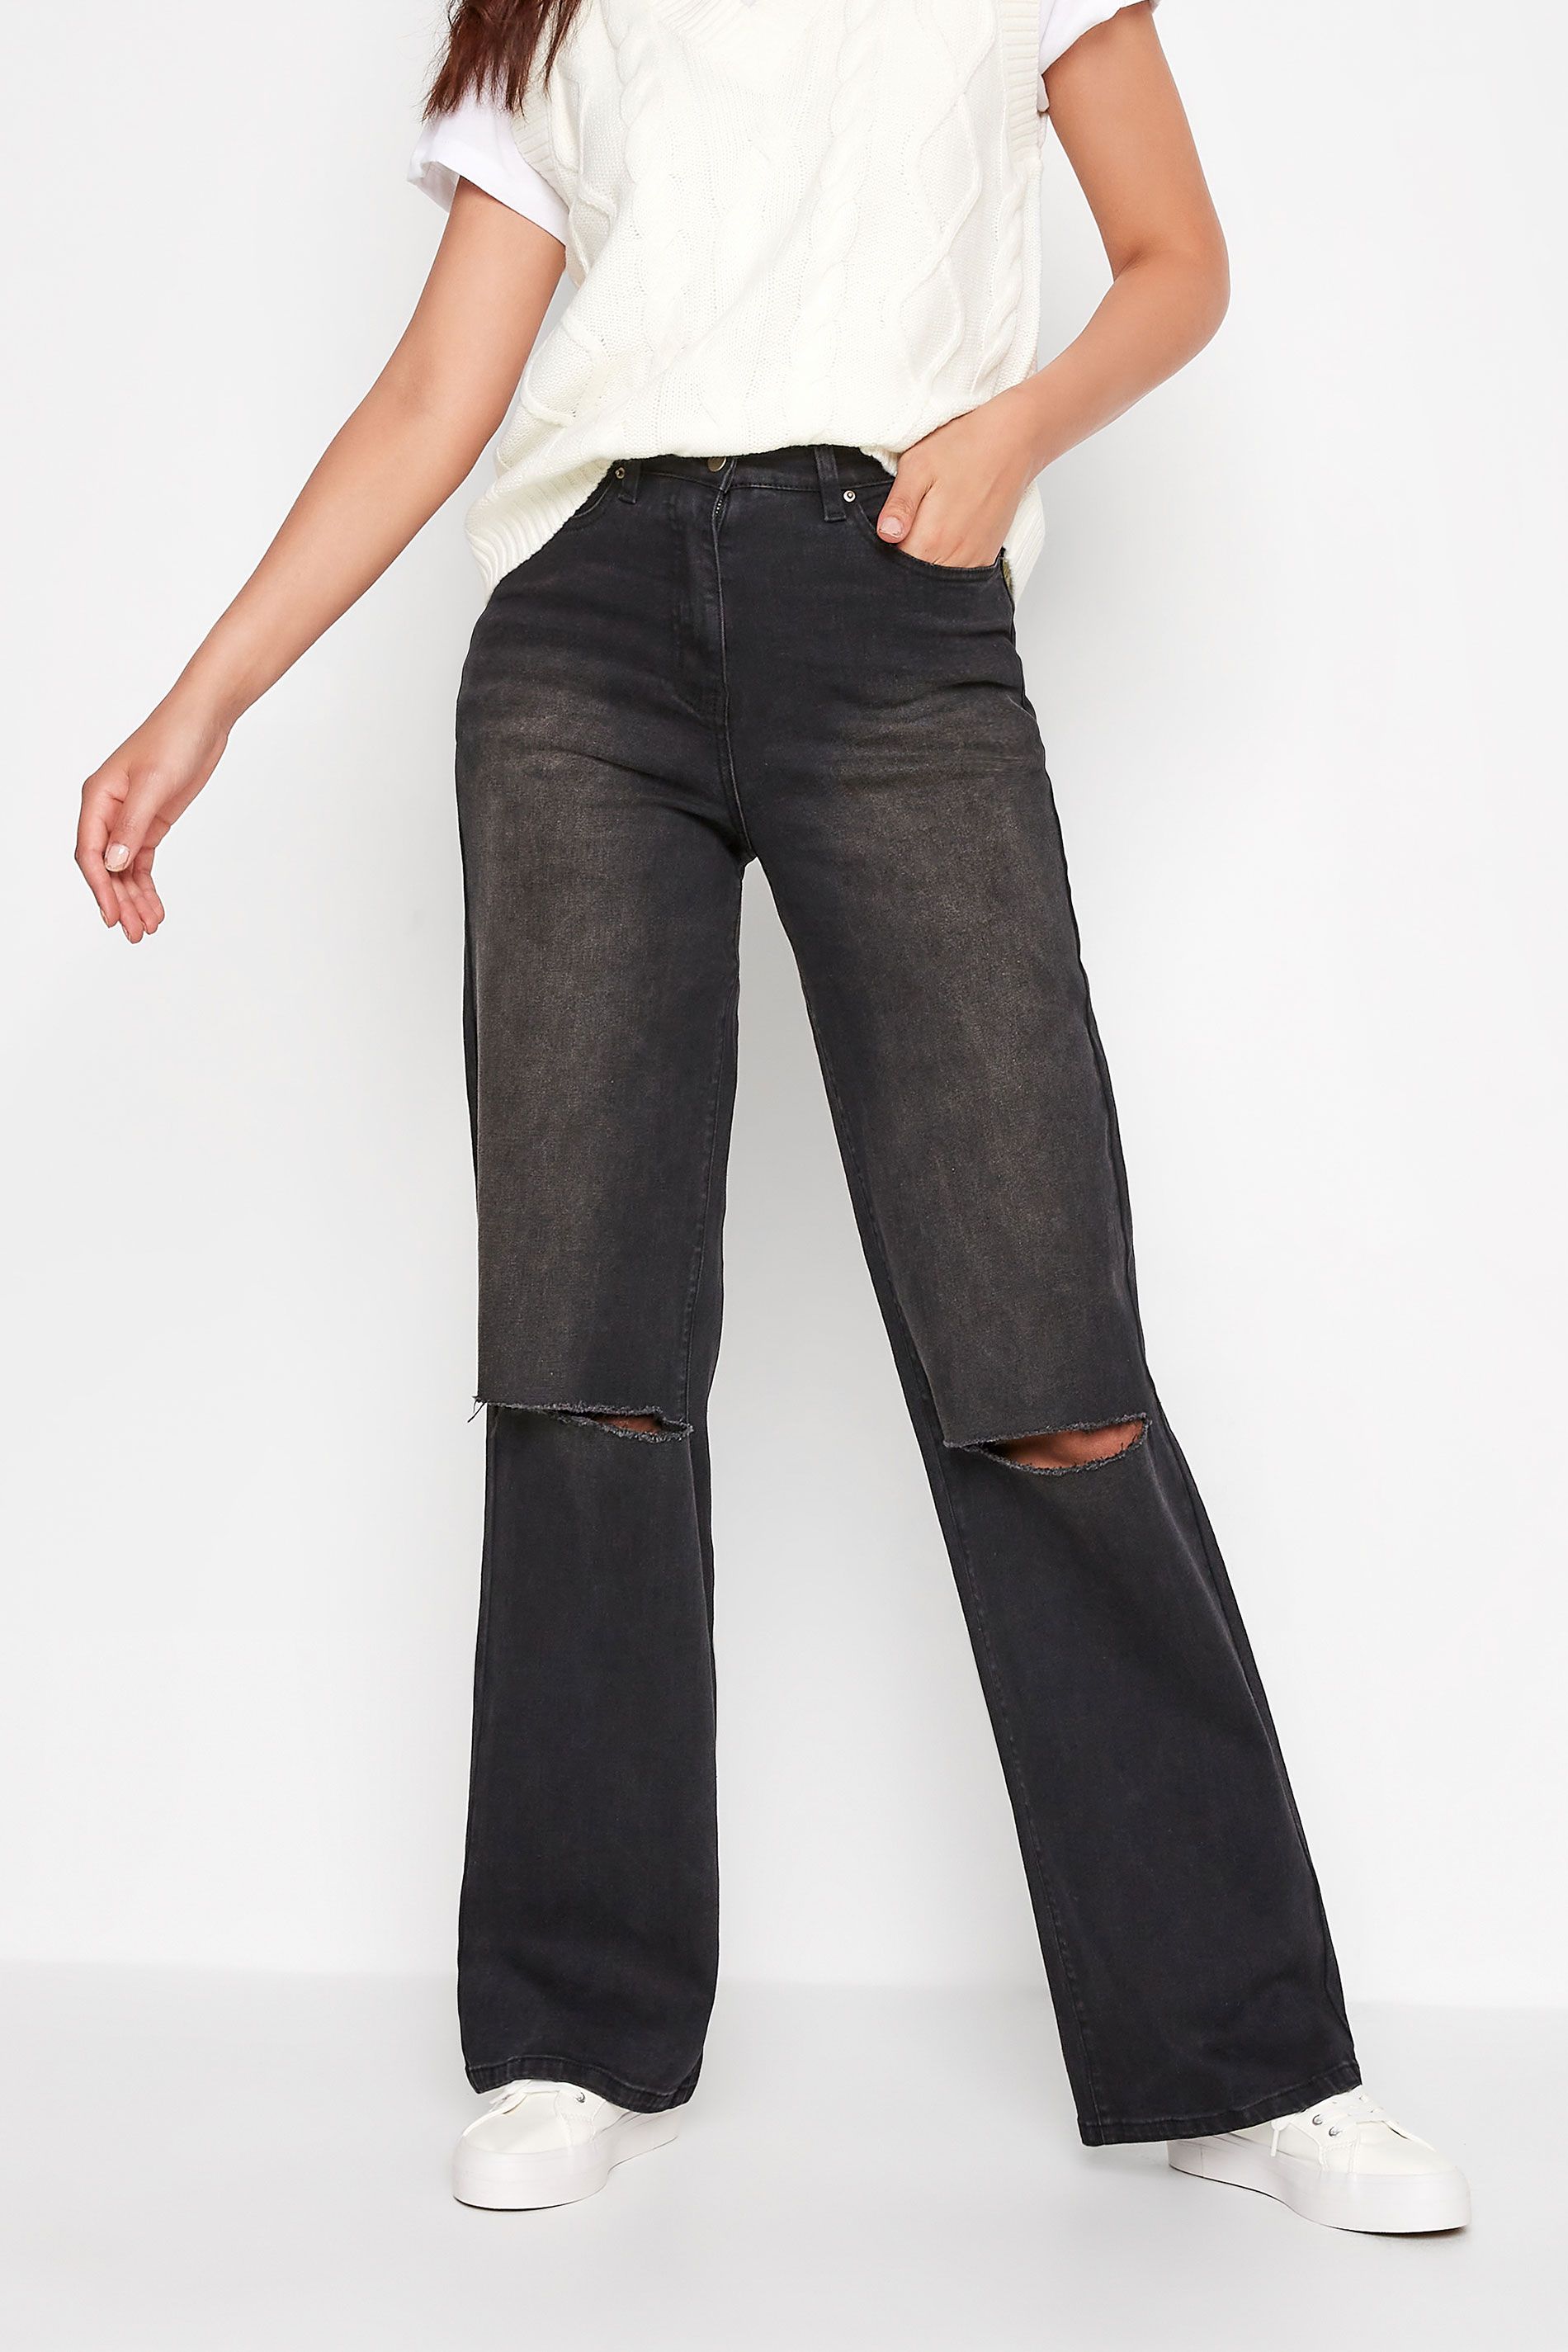 LTS Tall Black Distressed BEA Stretch Wide Leg Jeans | Long Tall Sally